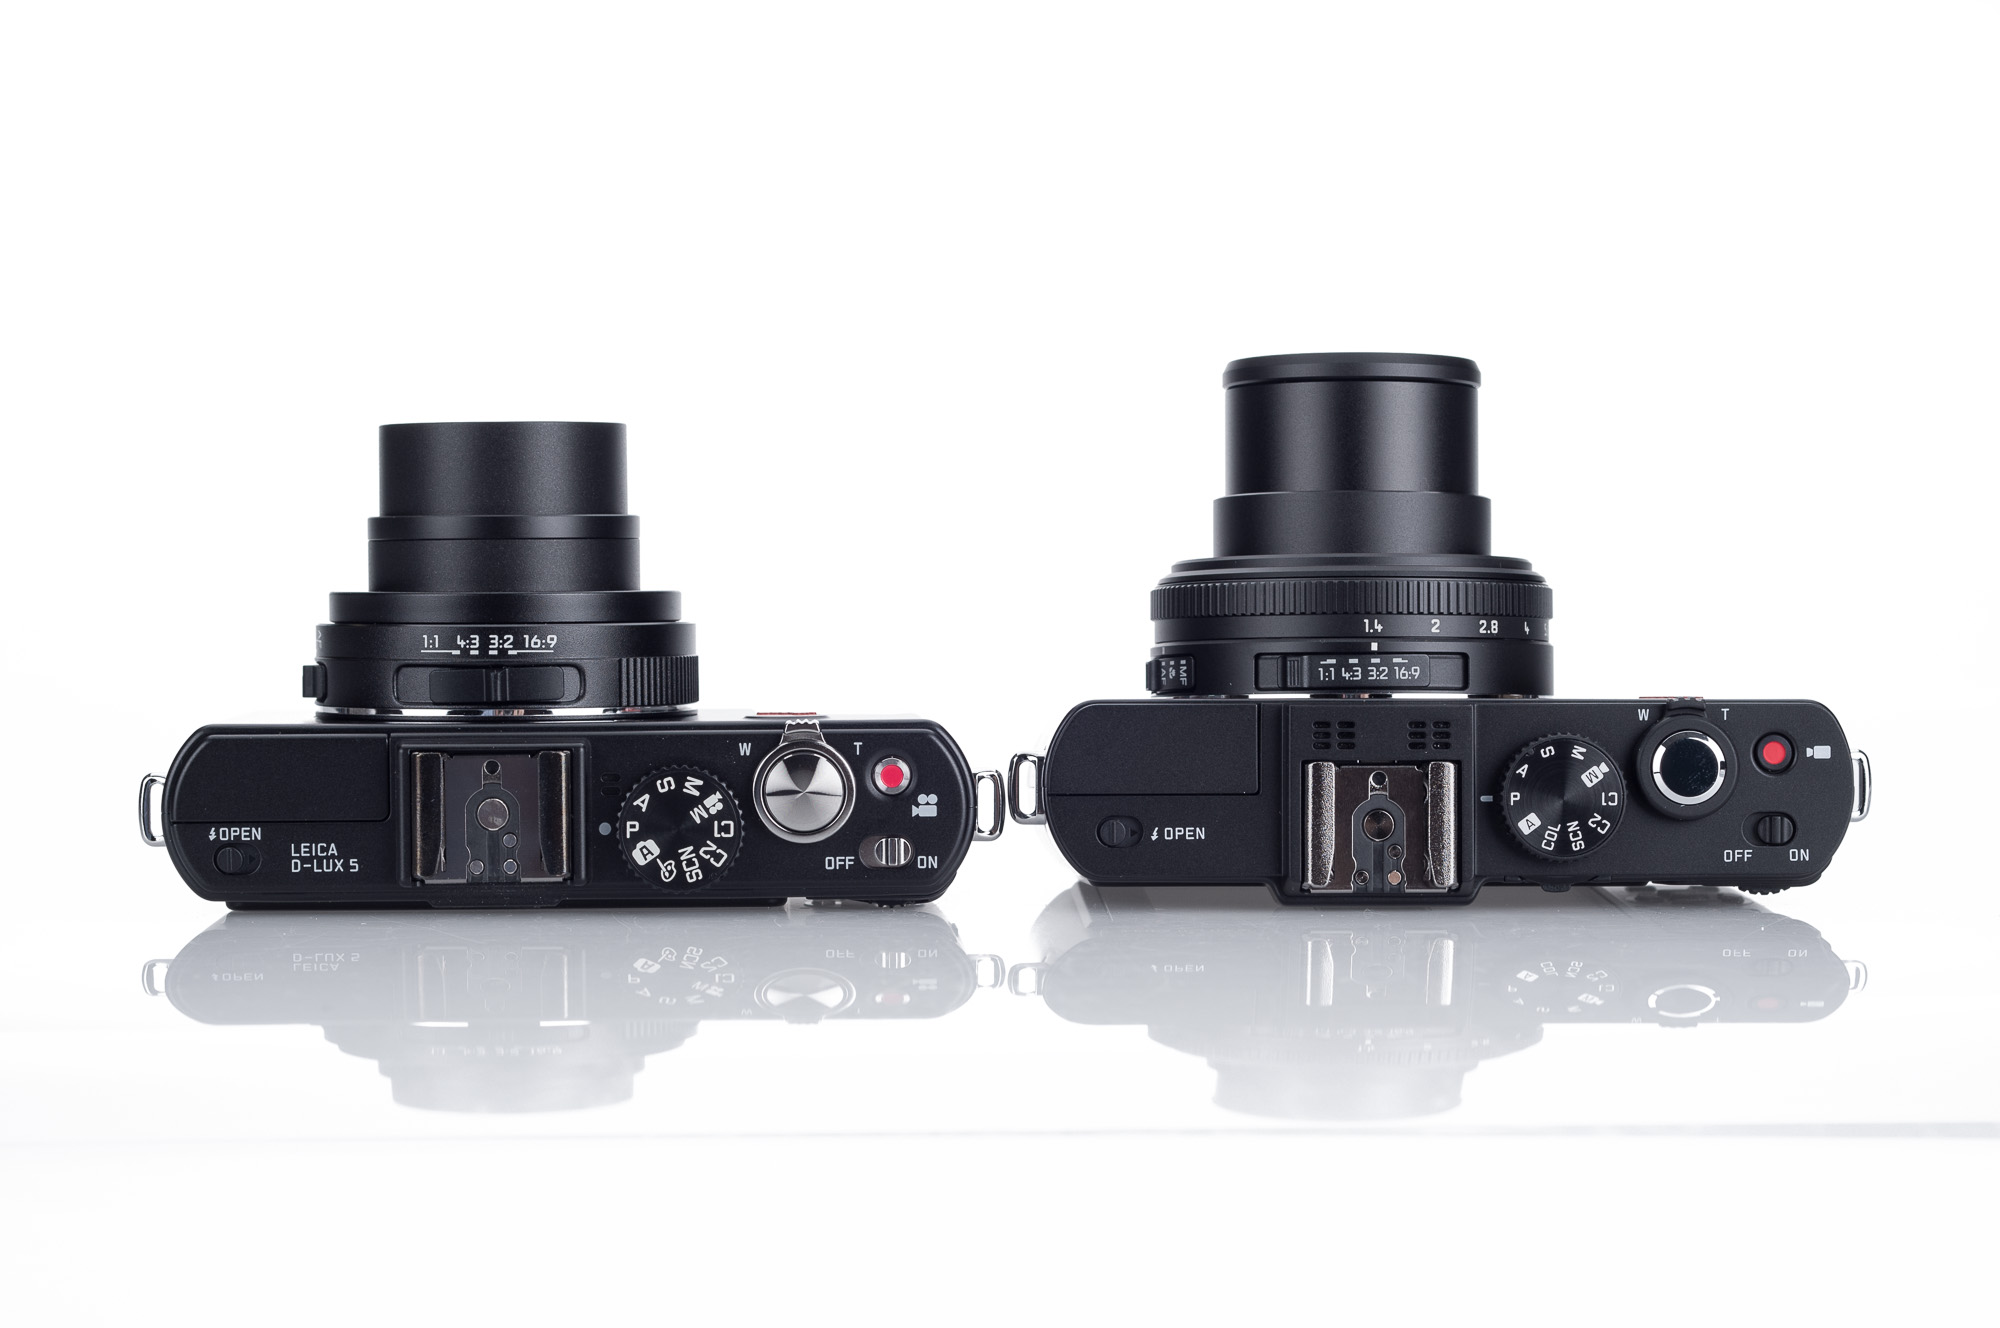 Leica D-Lux 6 Digital Cameras